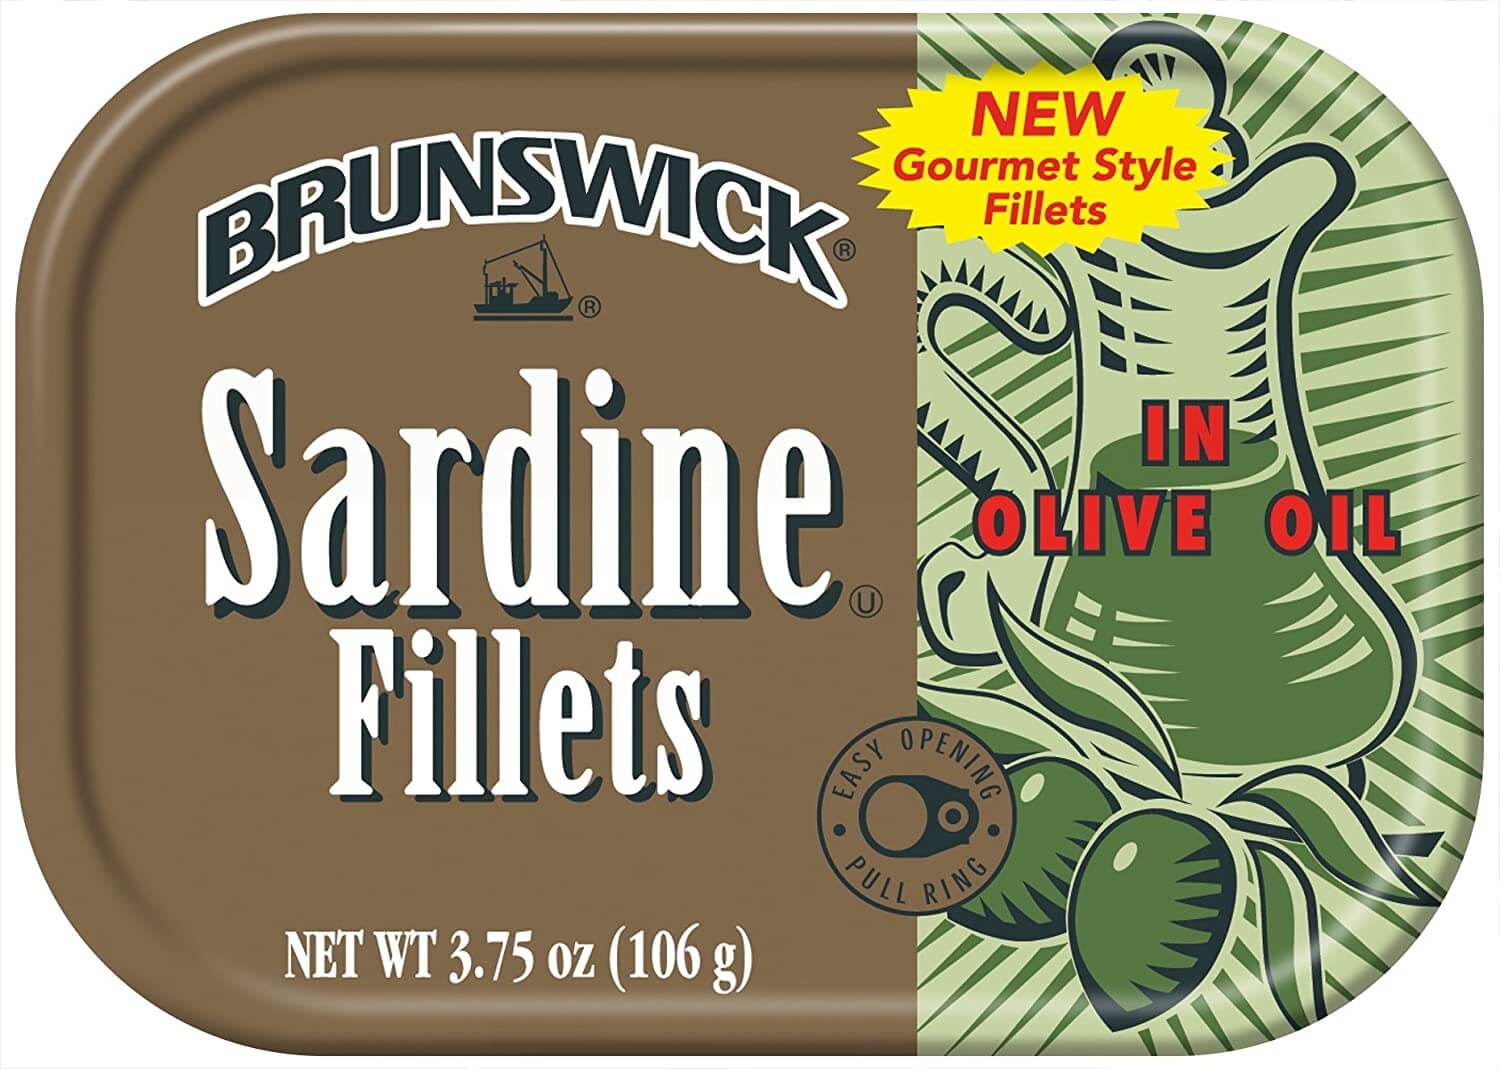 BRUNSWICK Wild Caught Sardine Fillets in Olive Oil